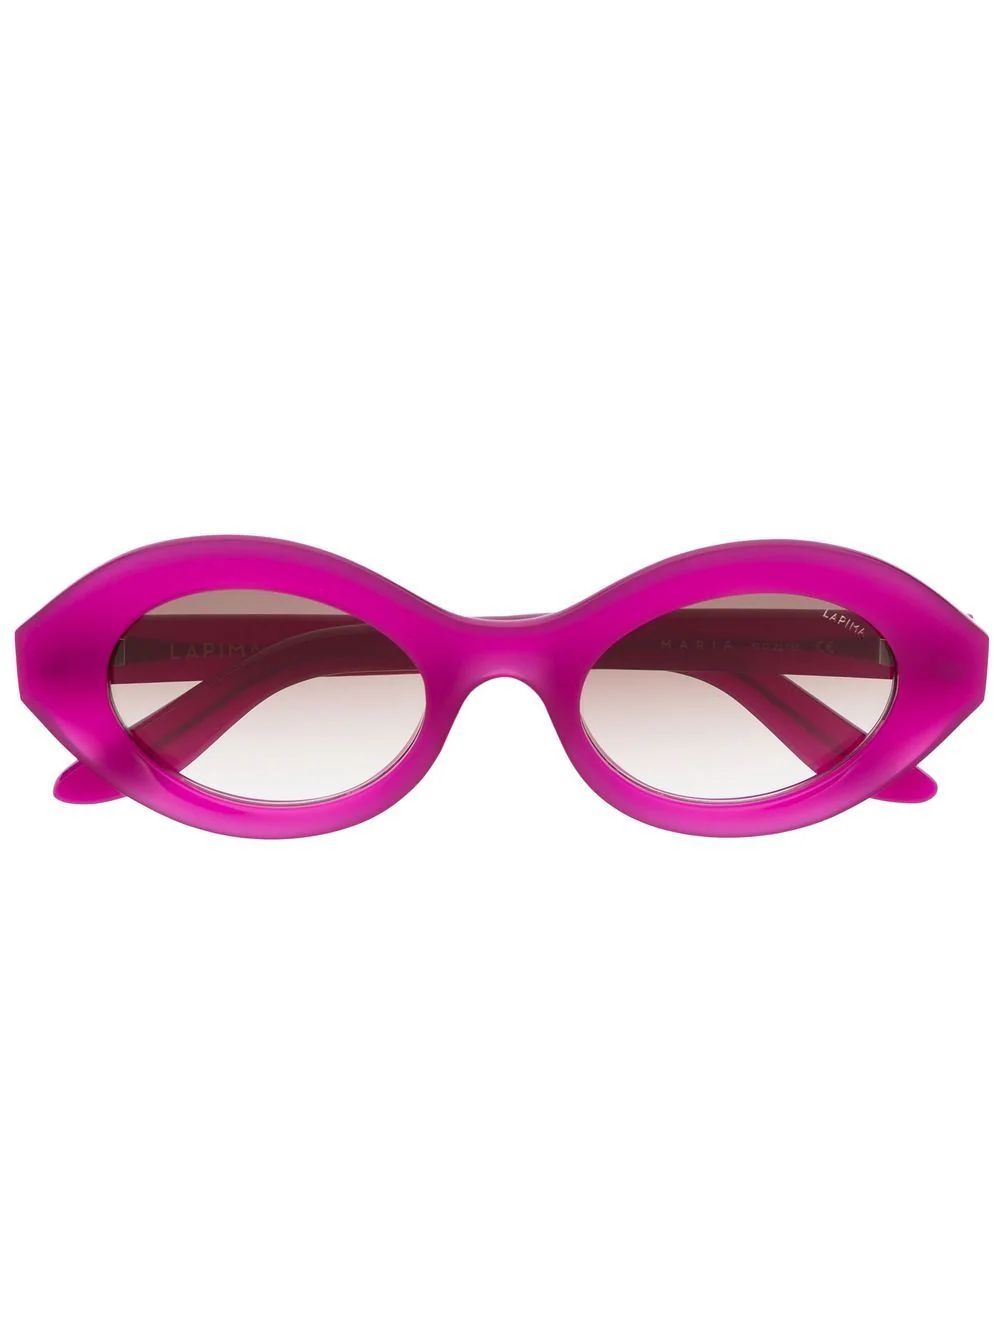 The DetailsLapimaMaria Ultraviolet cat-eye sunglassespurple acetate cat-eye frame tinted lenses s... | Farfetch Global